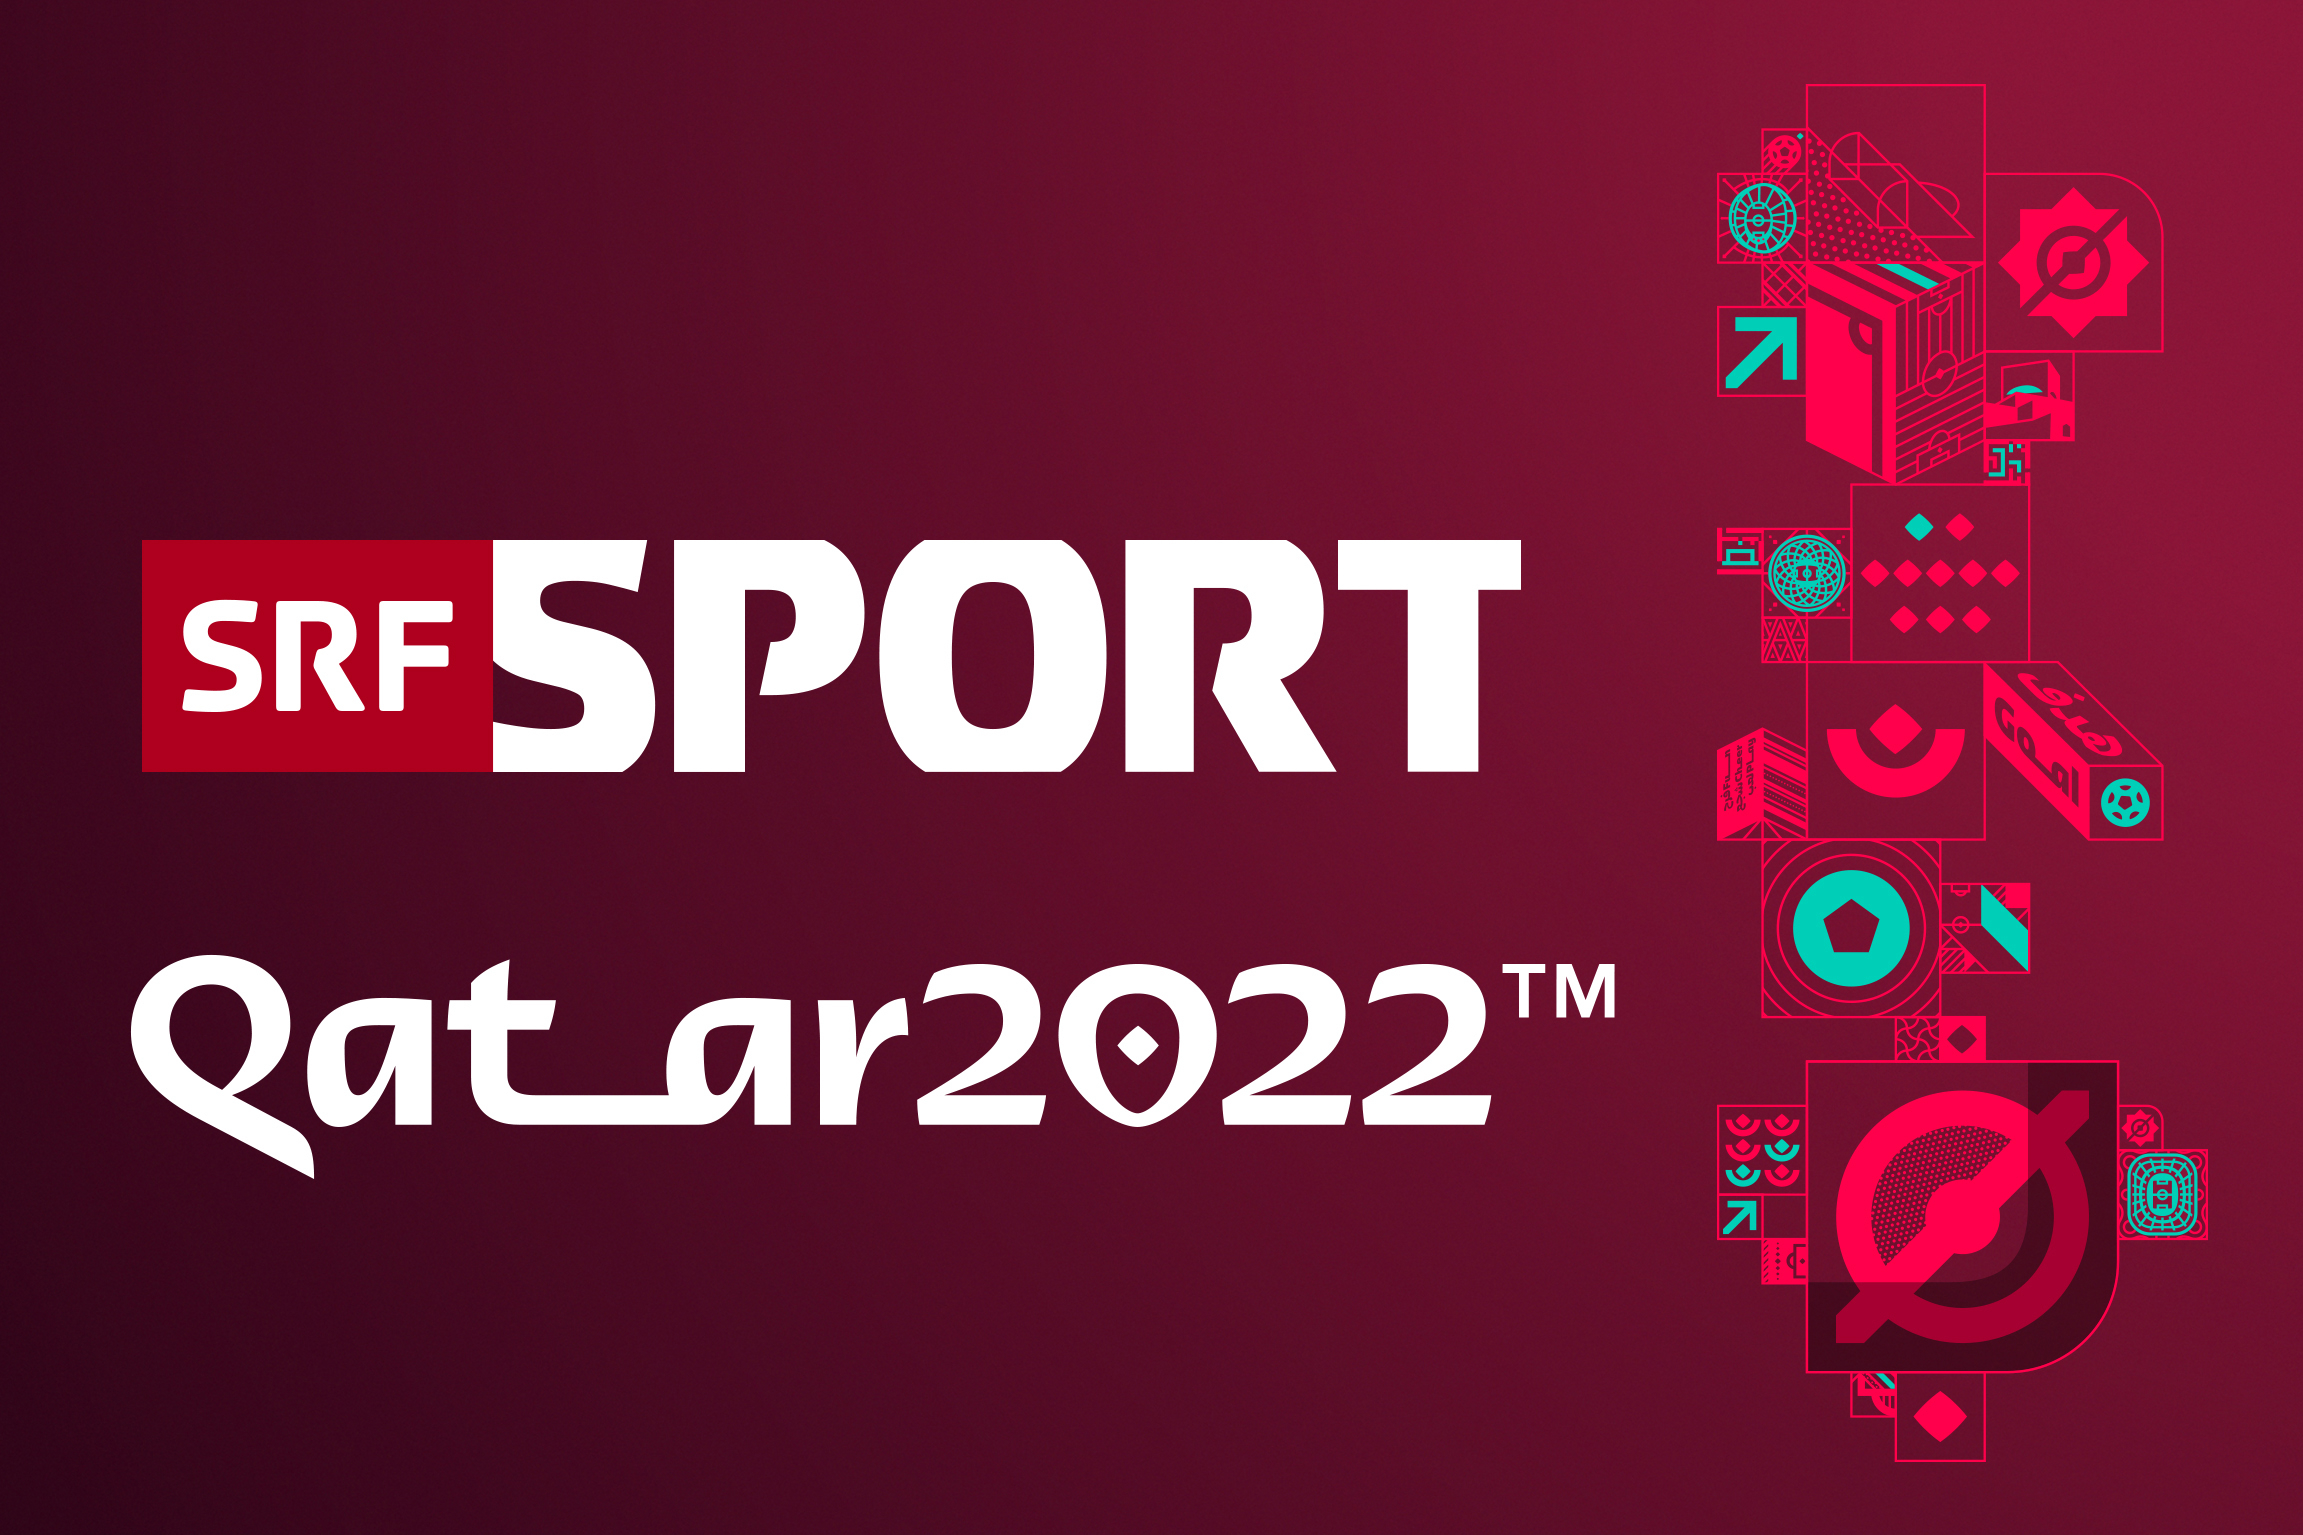 SRF Sport Qatar 2022 Keyvisual